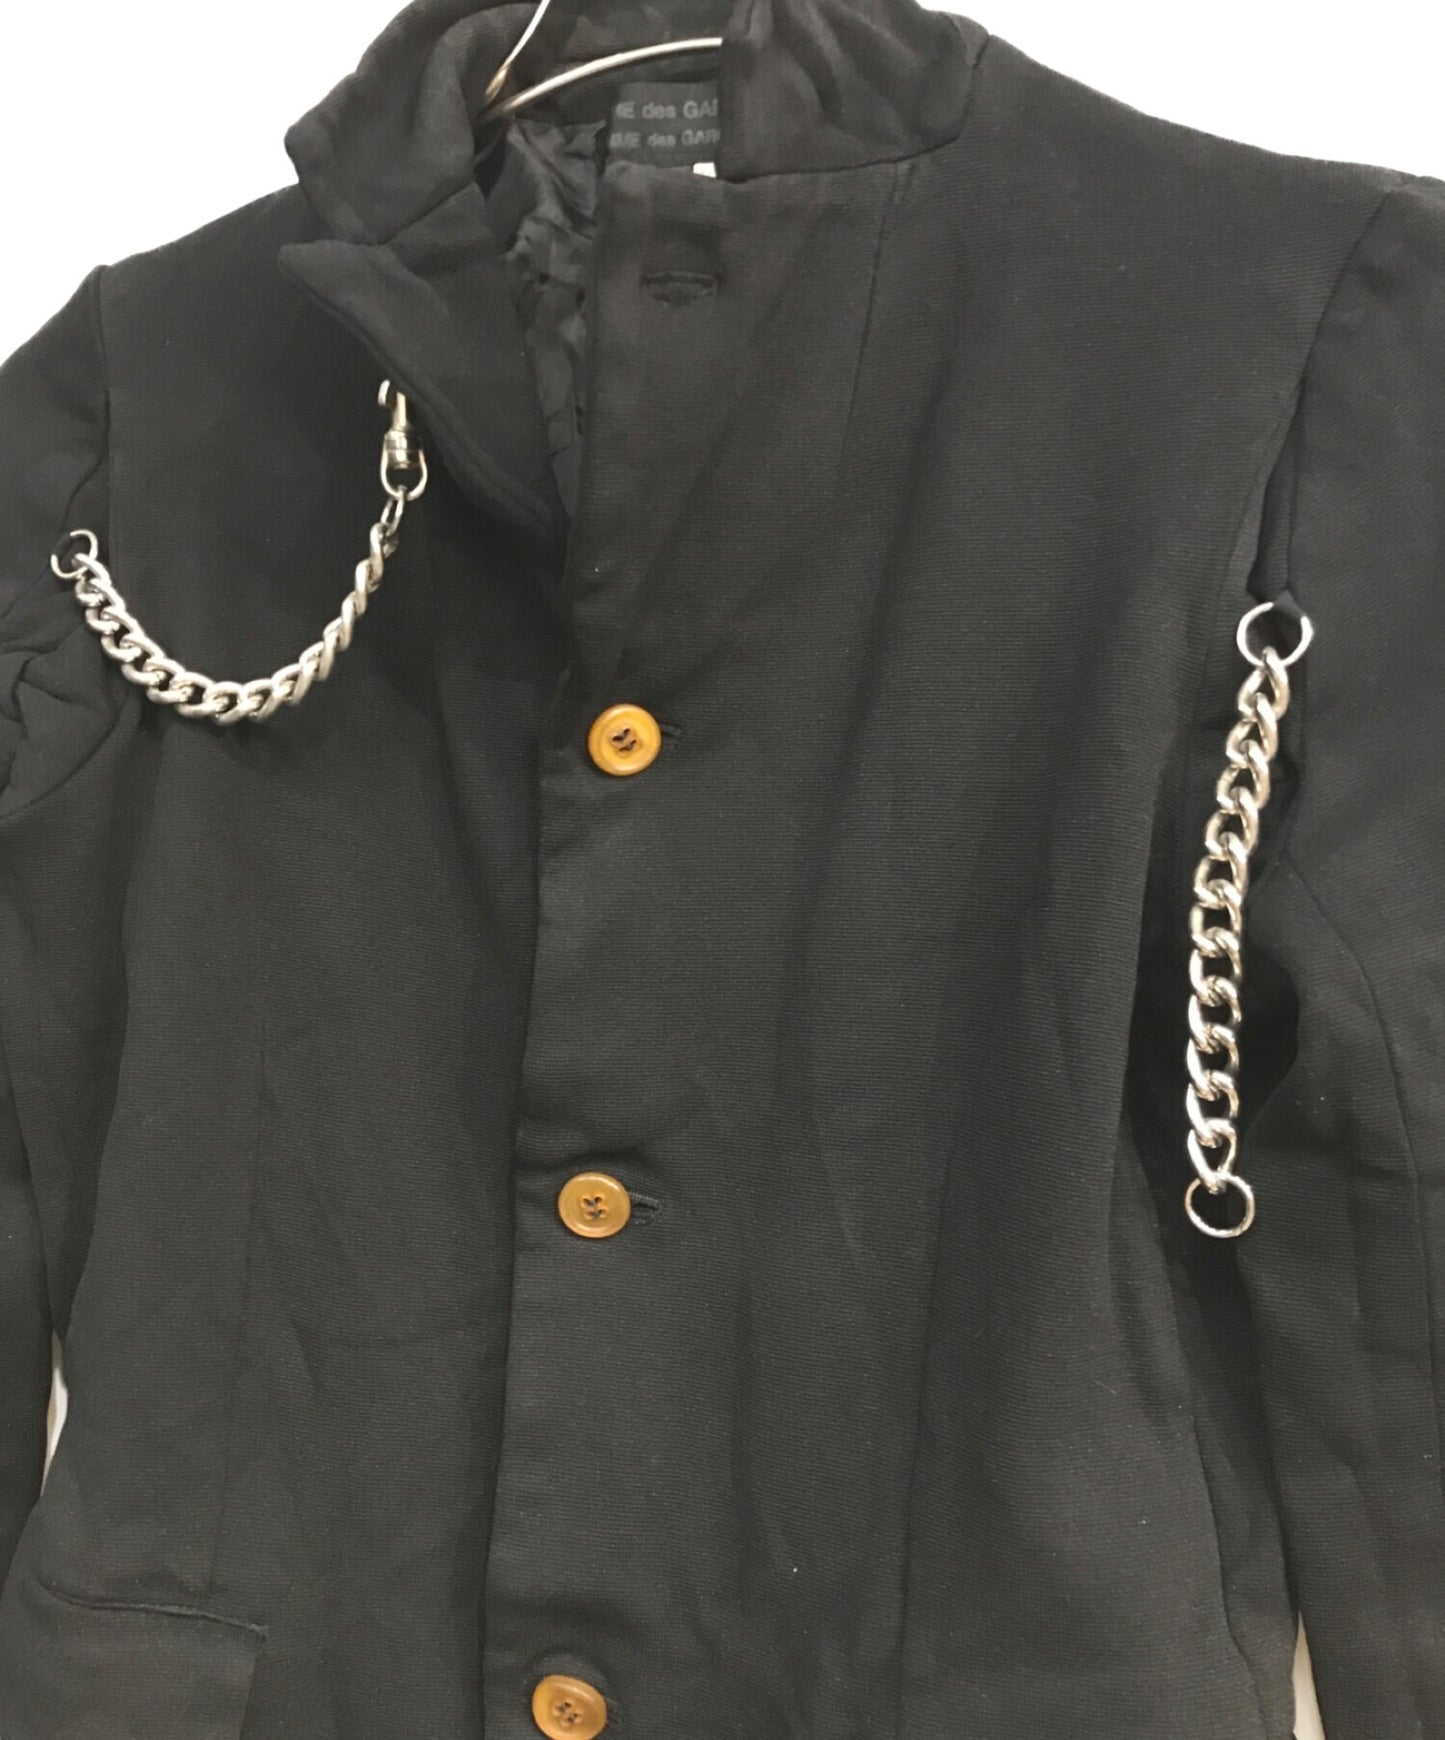 [Pre-owned] COMME des GARCONS COMME des GARCONS Chain decoration stand collar jacket RB-J024 AD2008 poly shrink-wrap black RB-J024